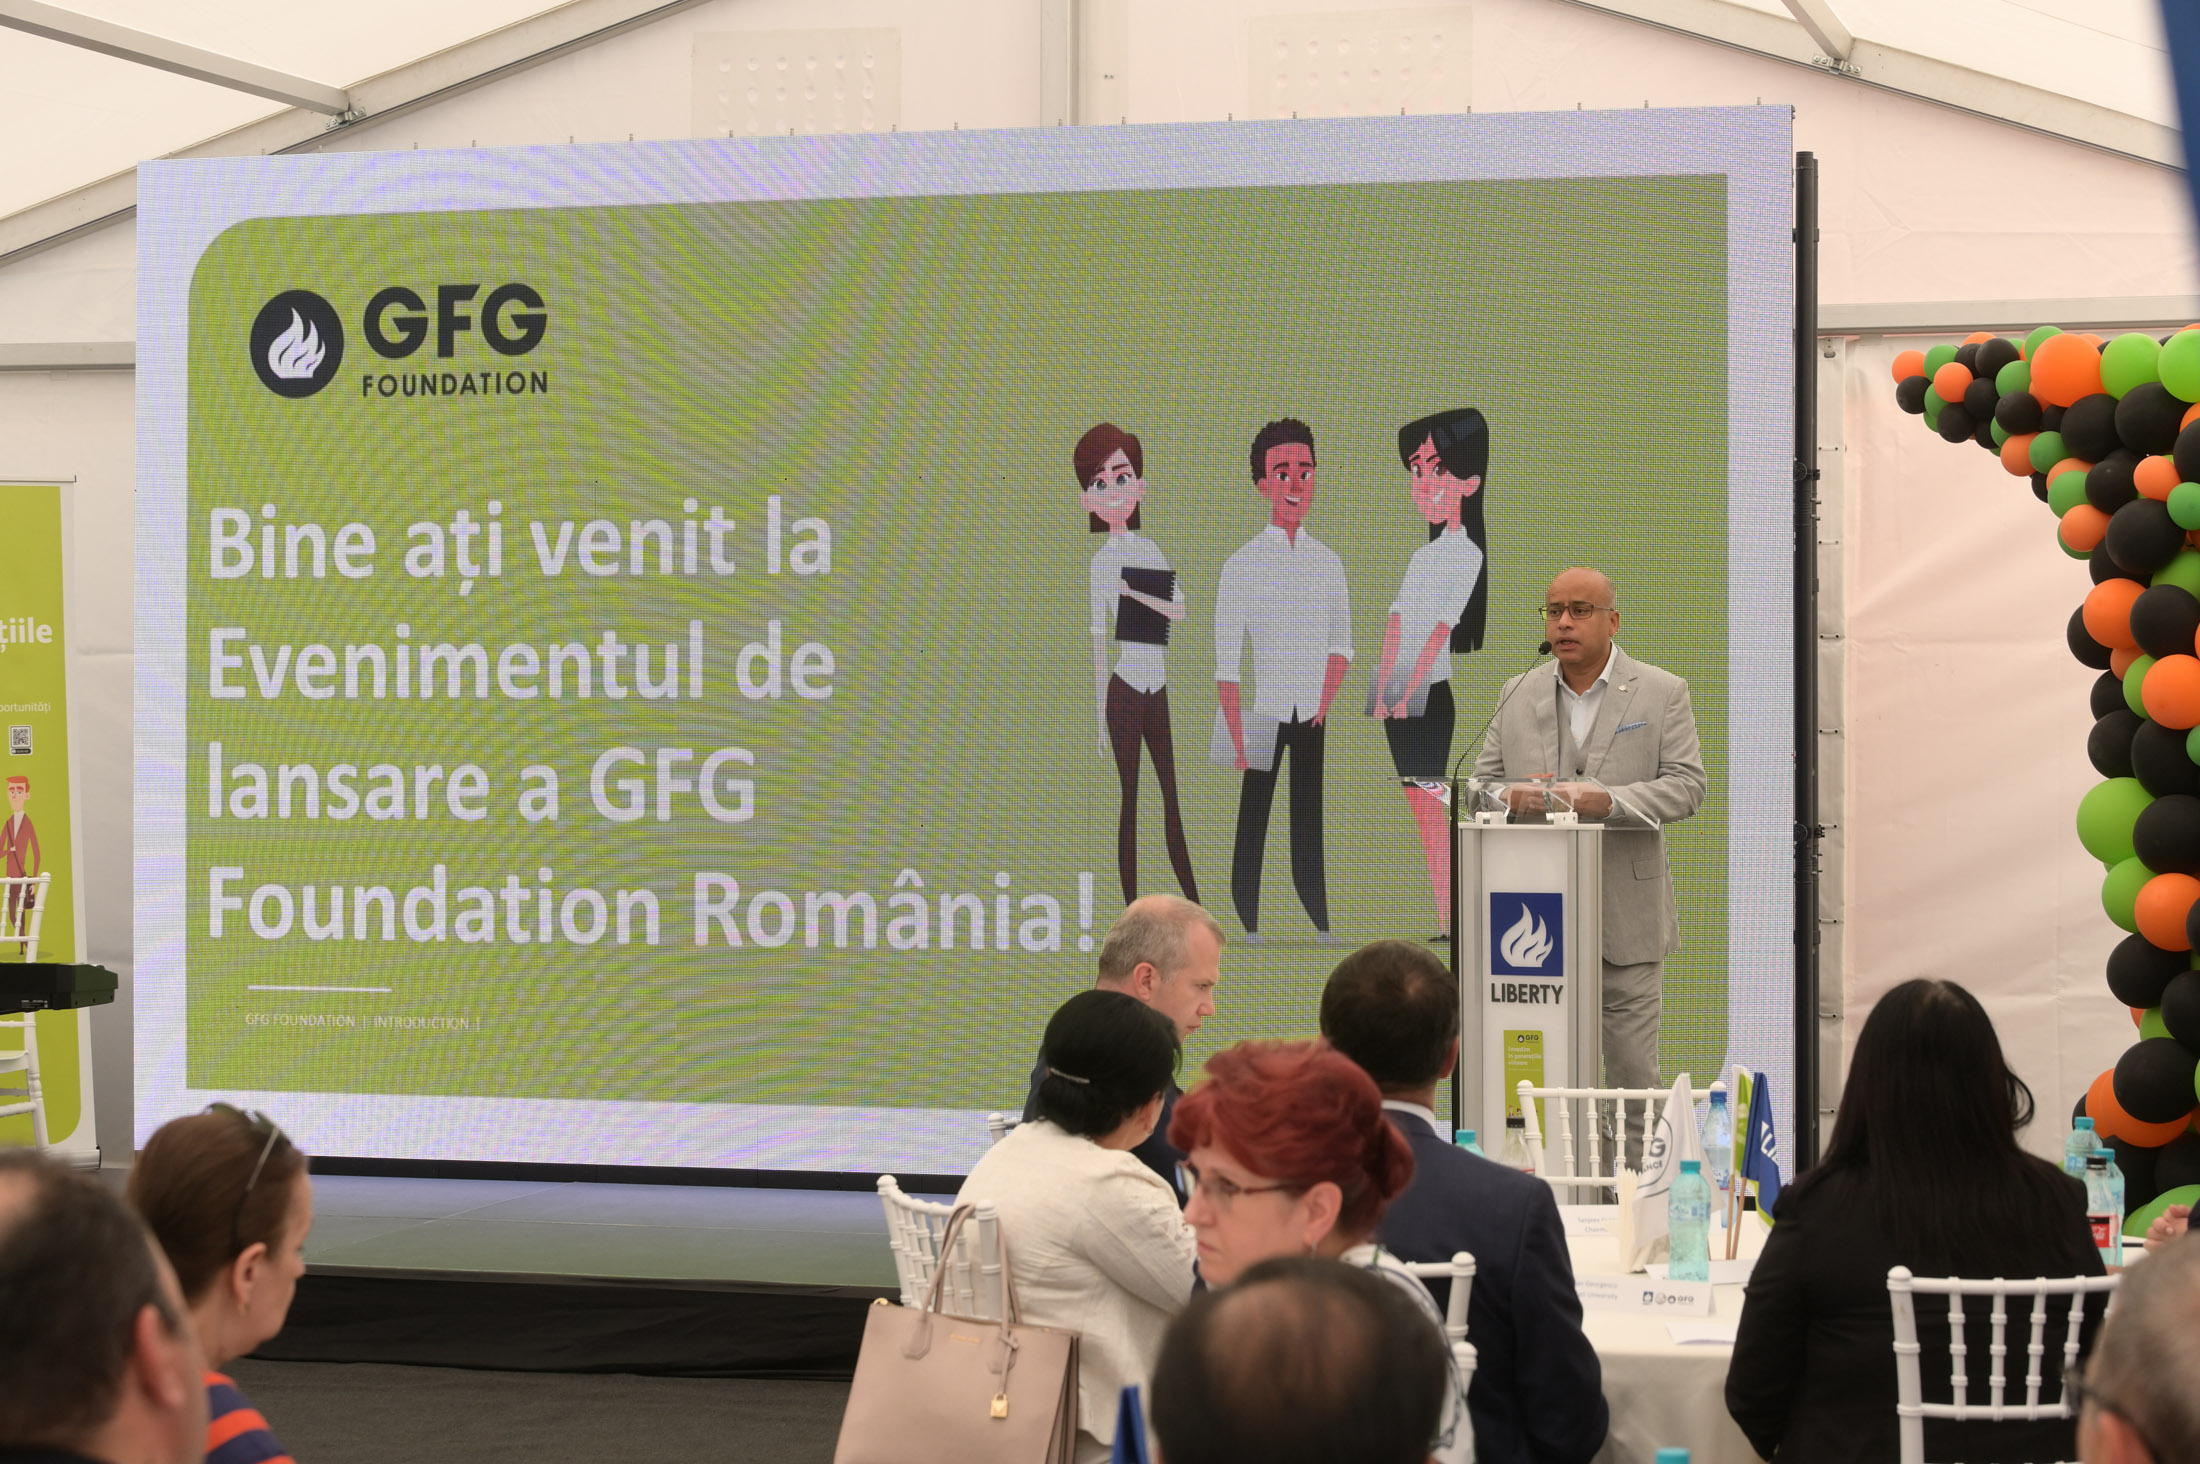 GFG Foundation breidt uit naar Roemenië